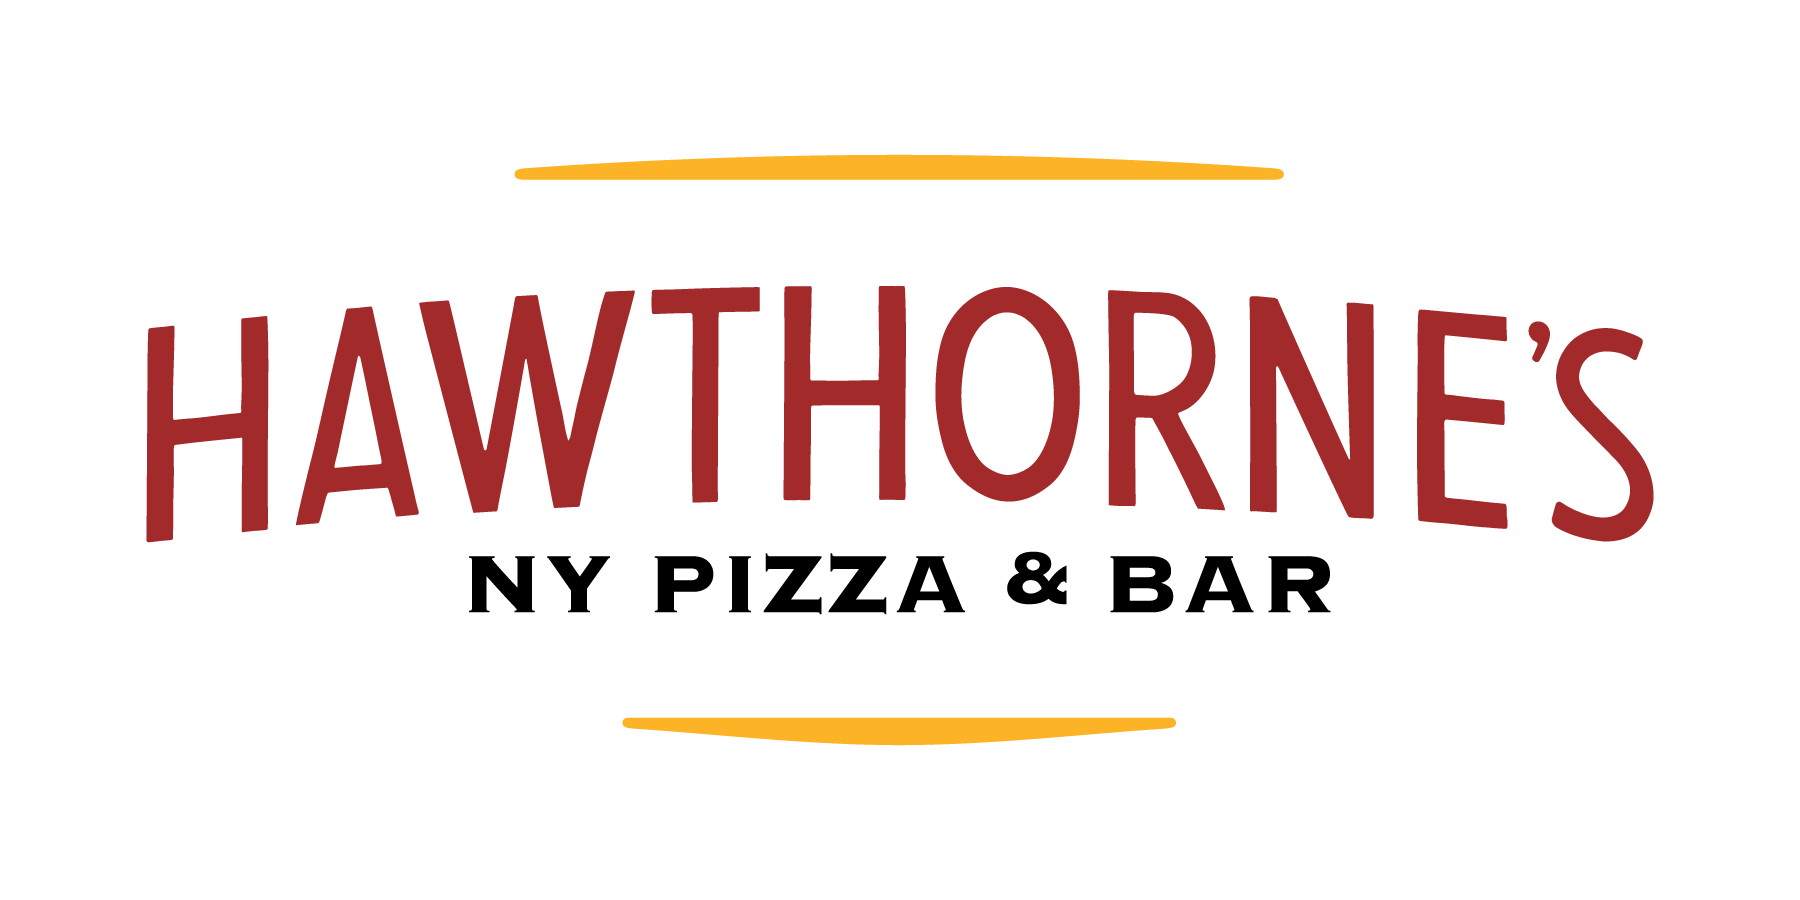 Hawthorne's Pizza - 7th Street logo top - Homepage